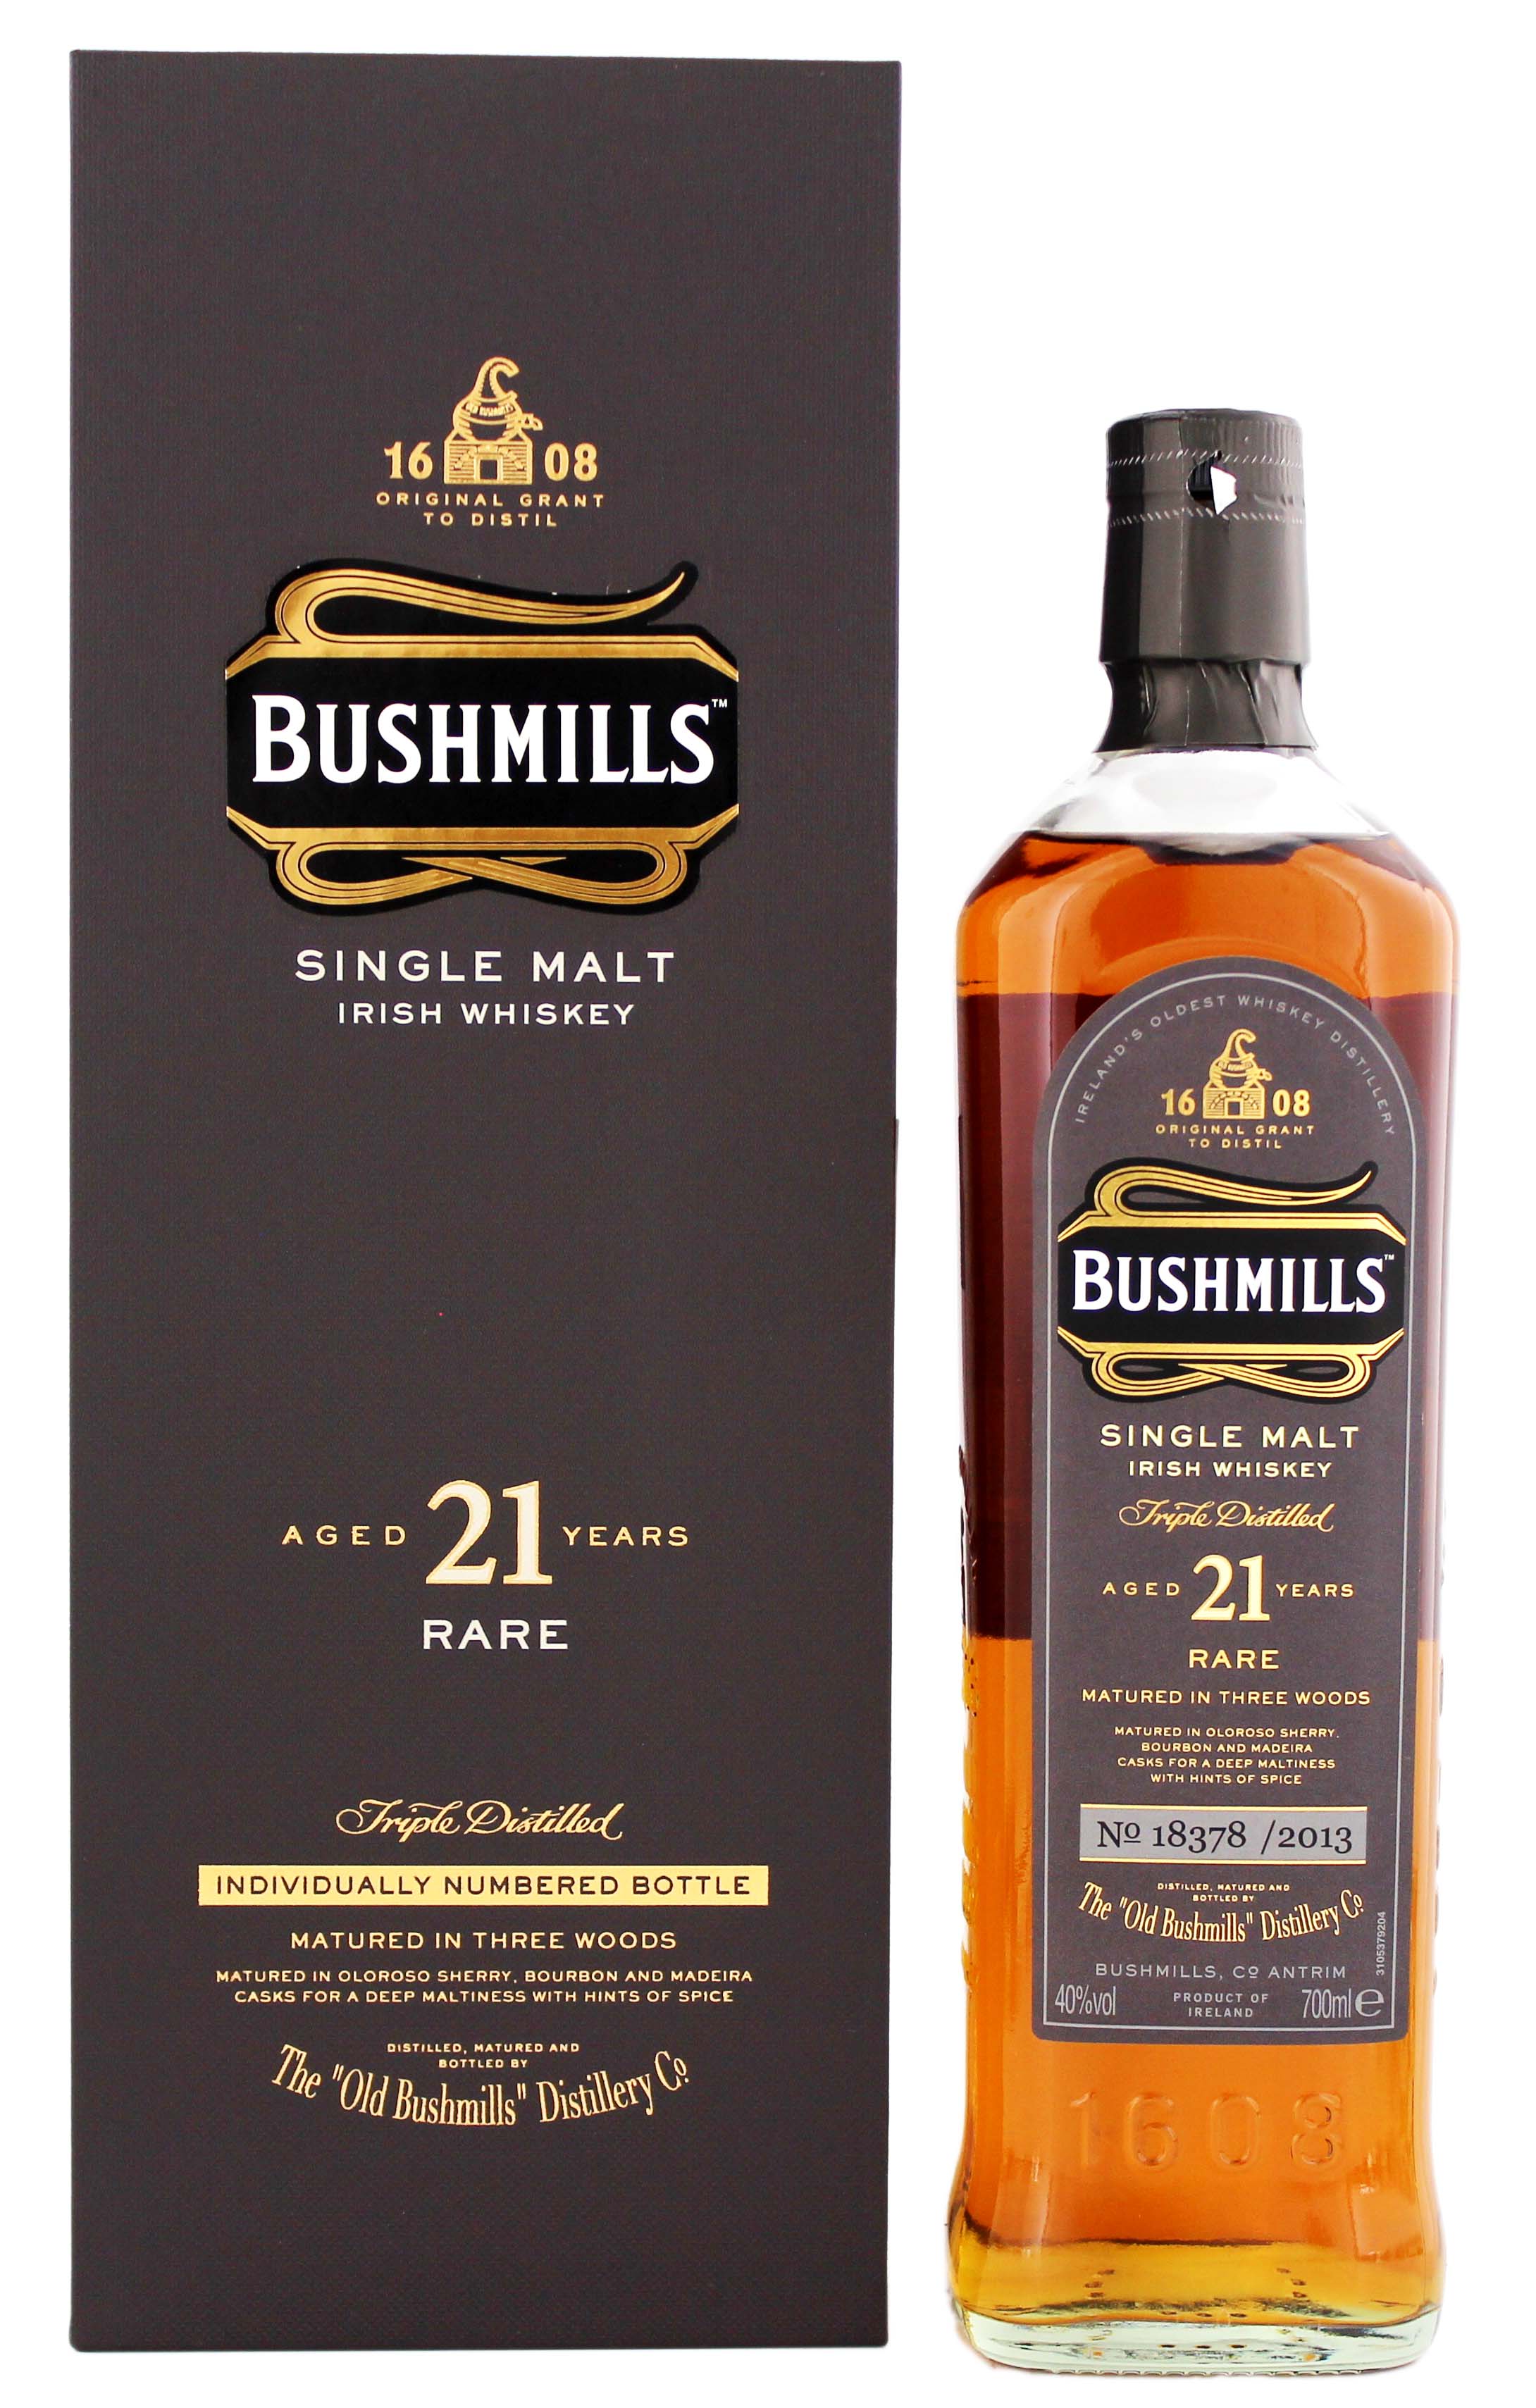 bushmills whiskey tour price